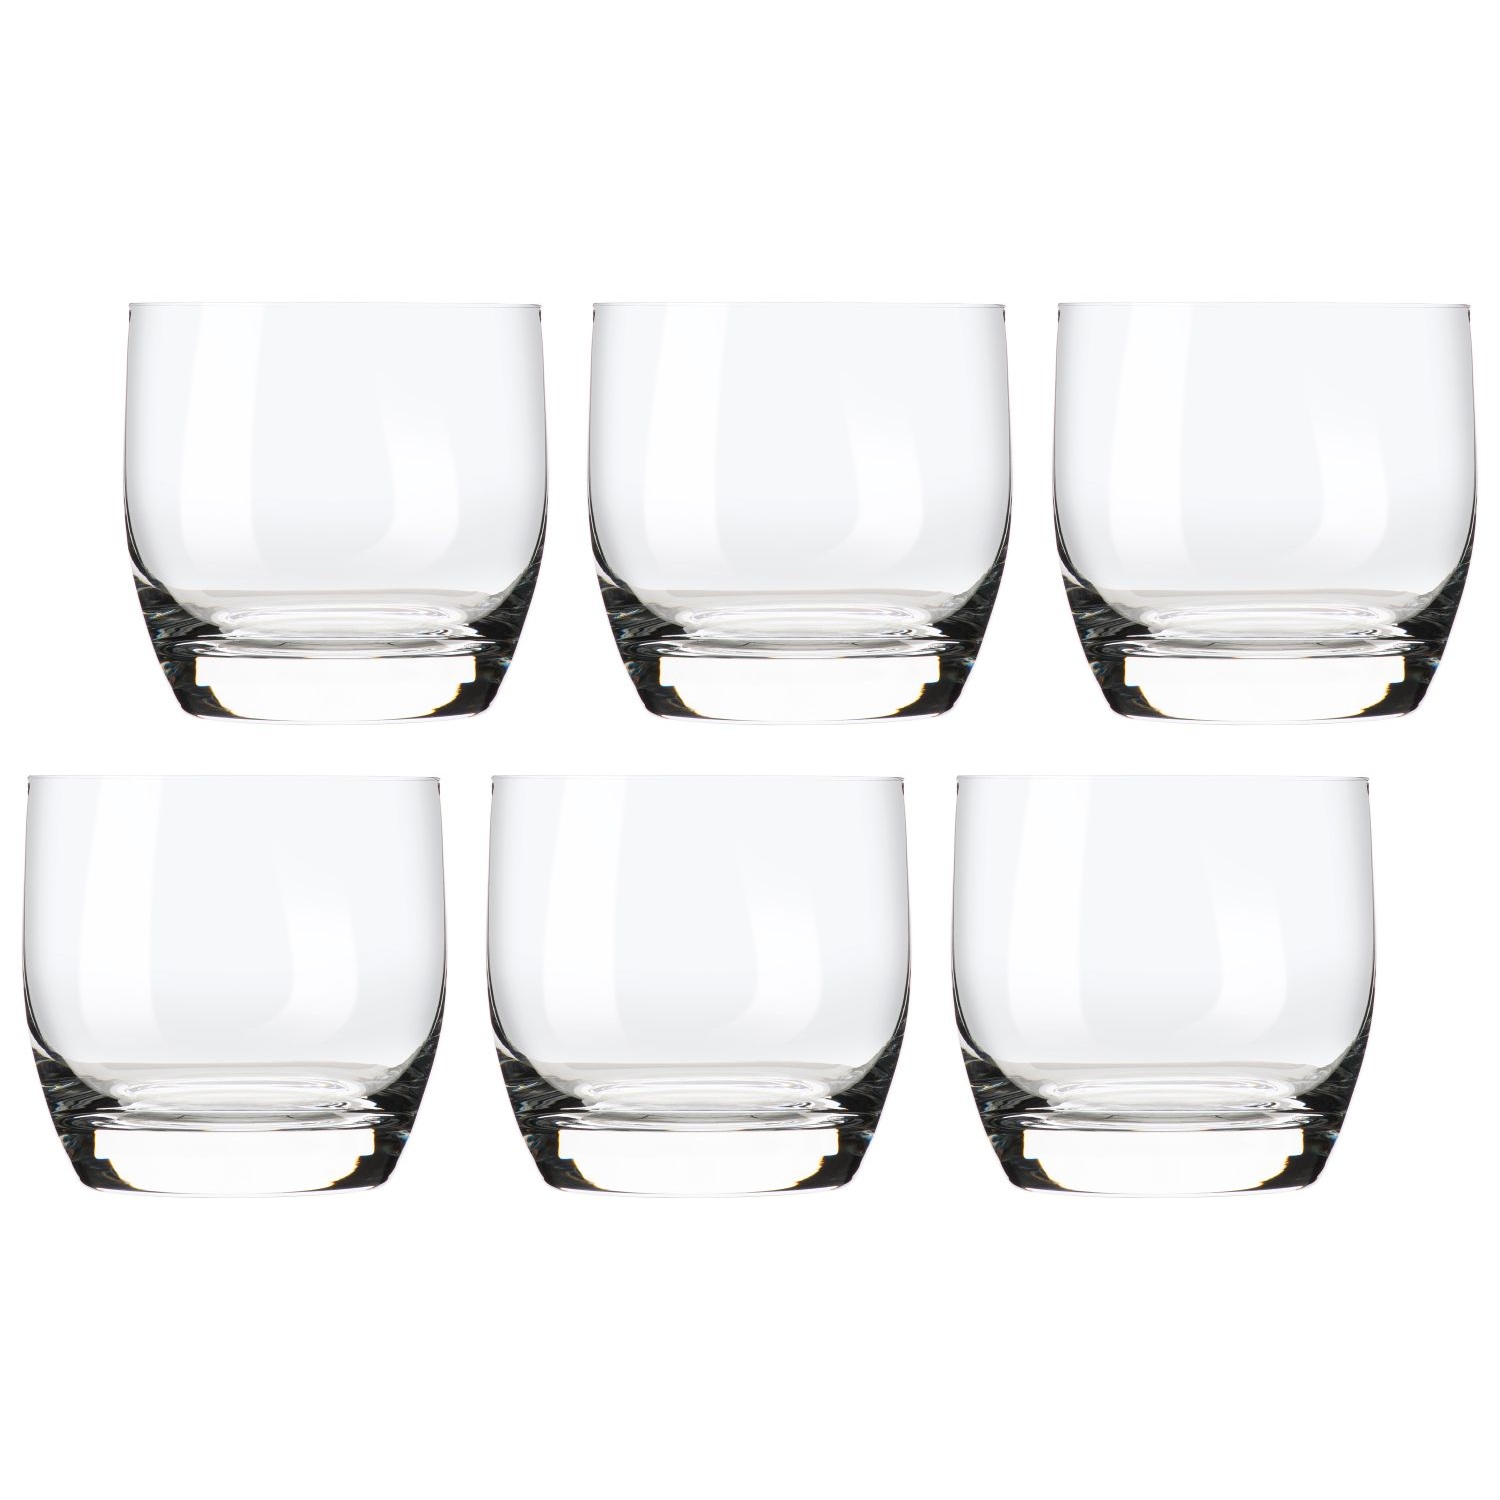 Набор стаканов Maxwell & Williams Cosmopolitan для виски 0,34 л набор стаканов pozzi milano 1876 modern classic для воды розовый 0 32 л 2 предмета